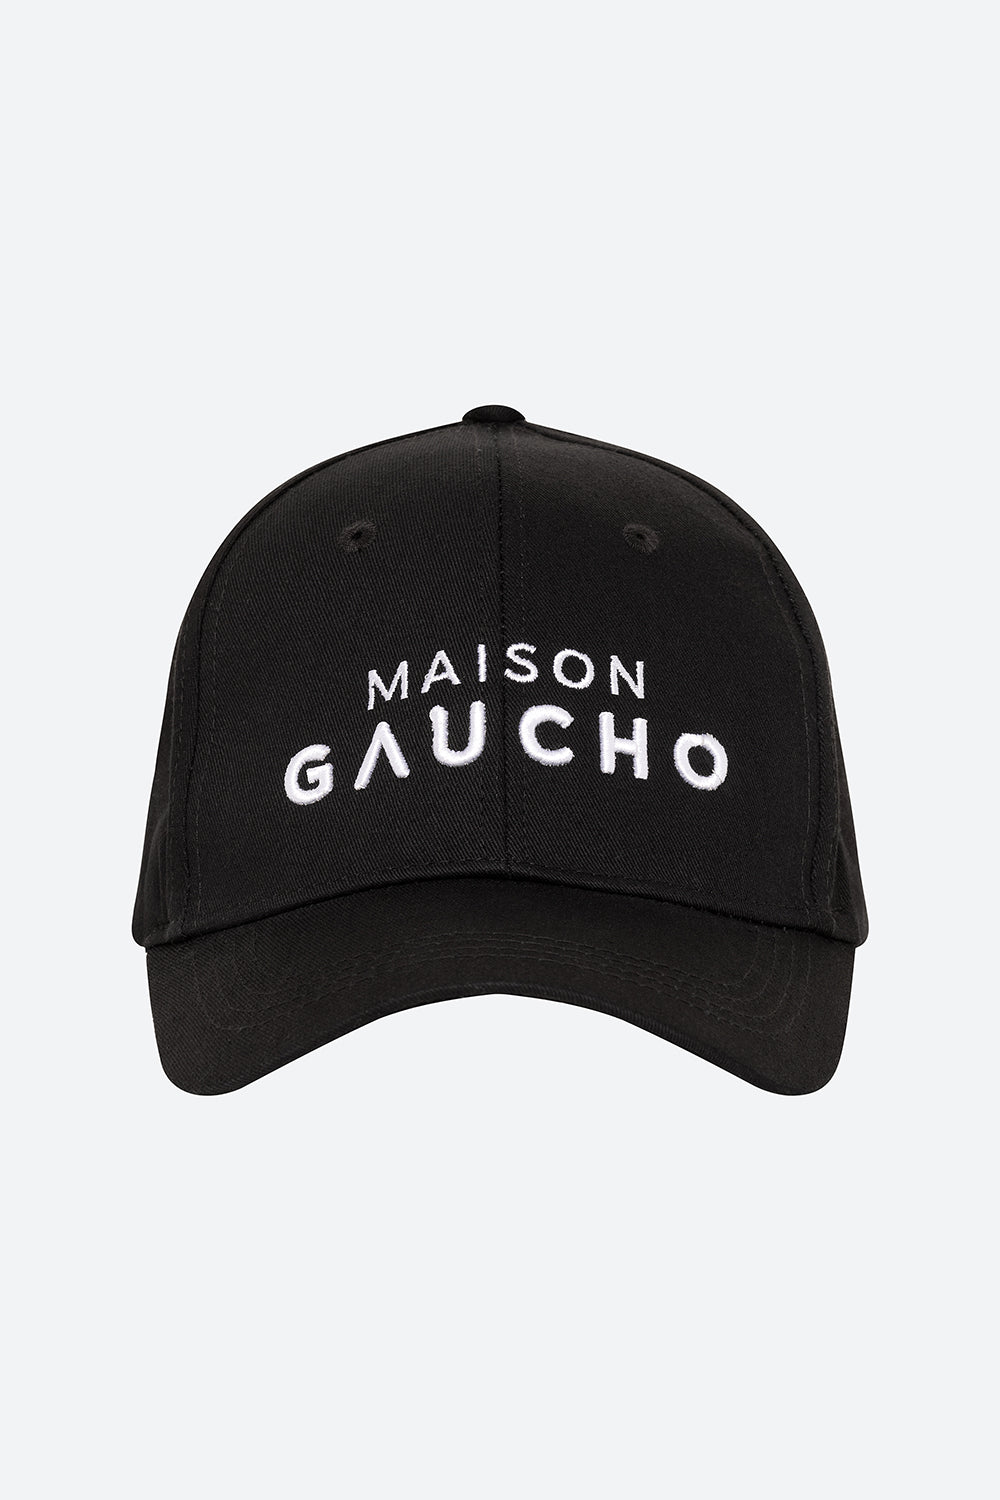 Maison Gaucho Cap in Black White